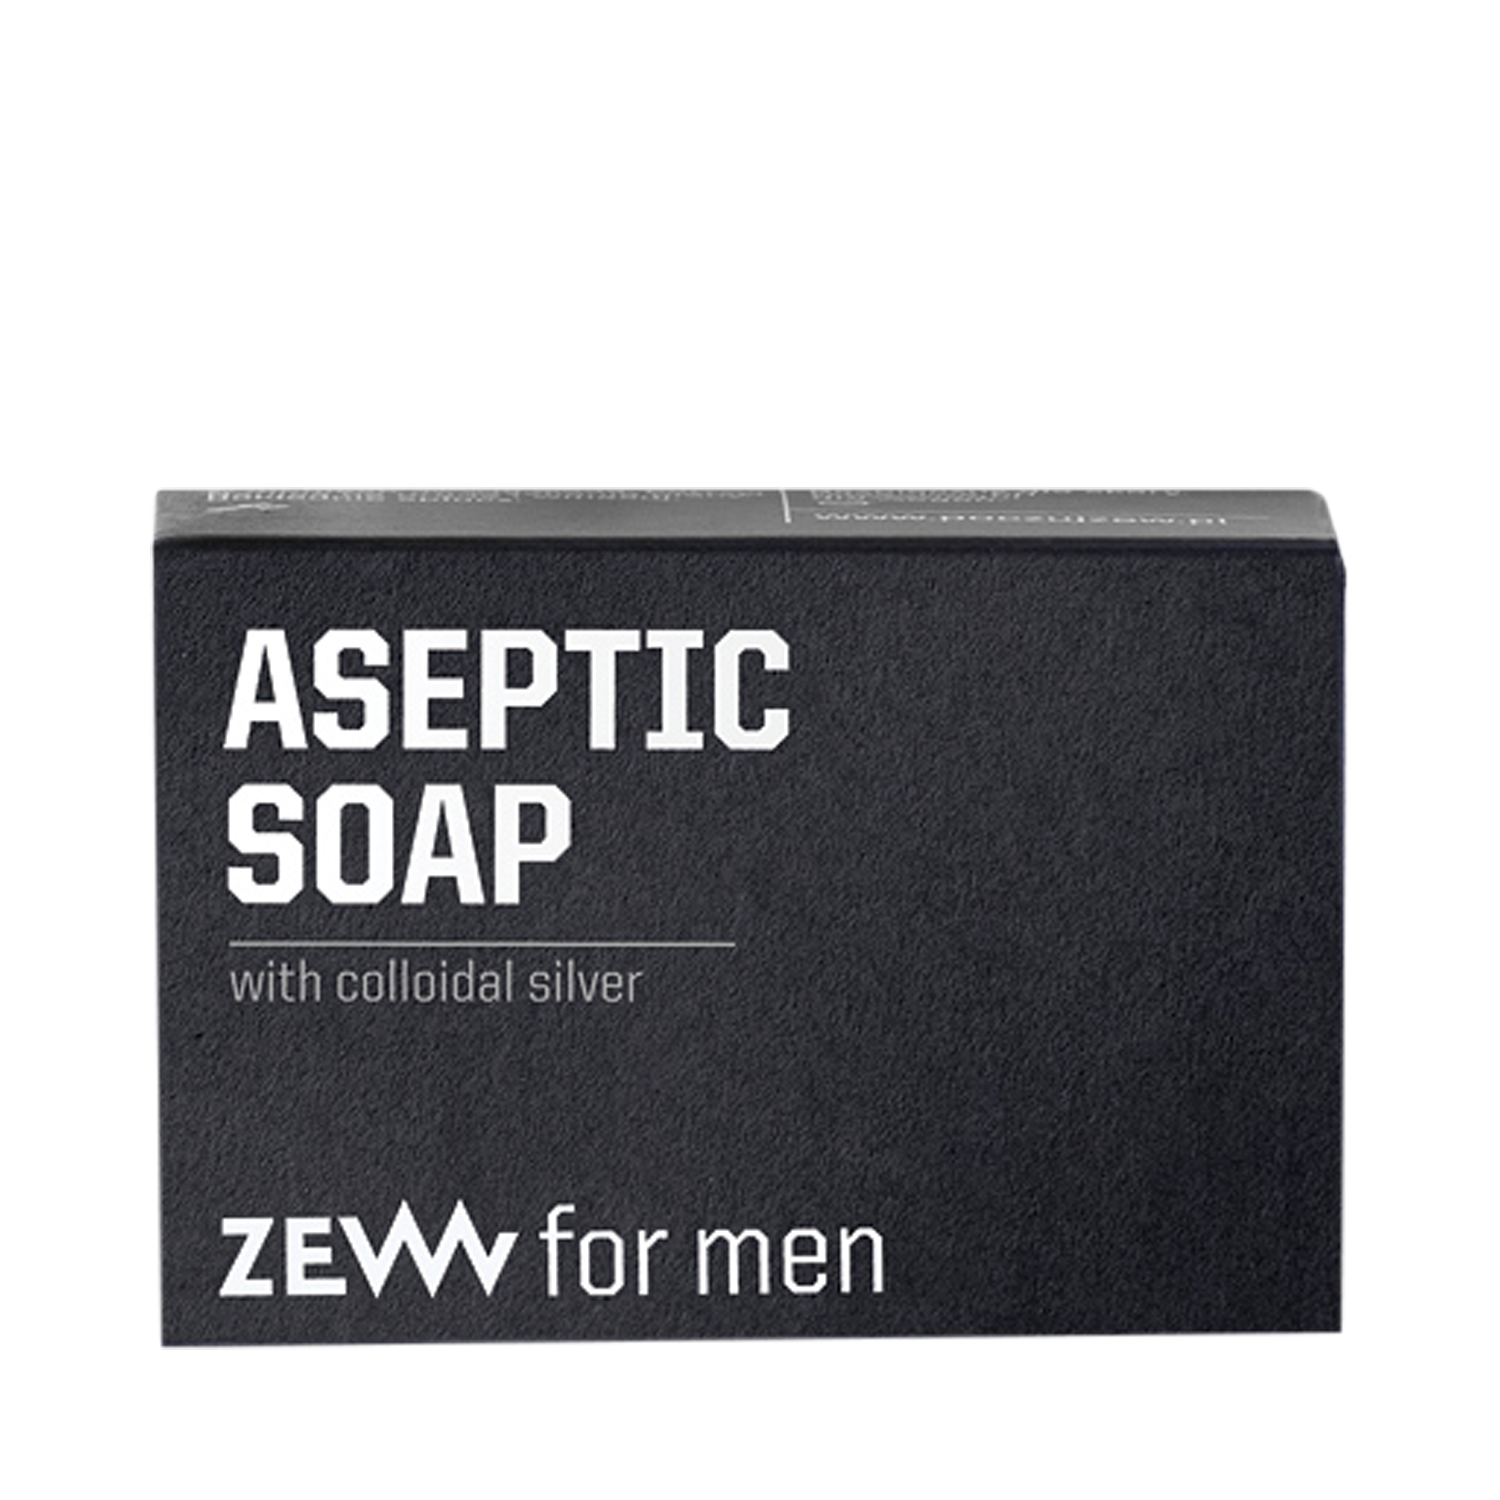 ZEW for men - Aseptic Soap - Seife mit Silber und Aktivkohle